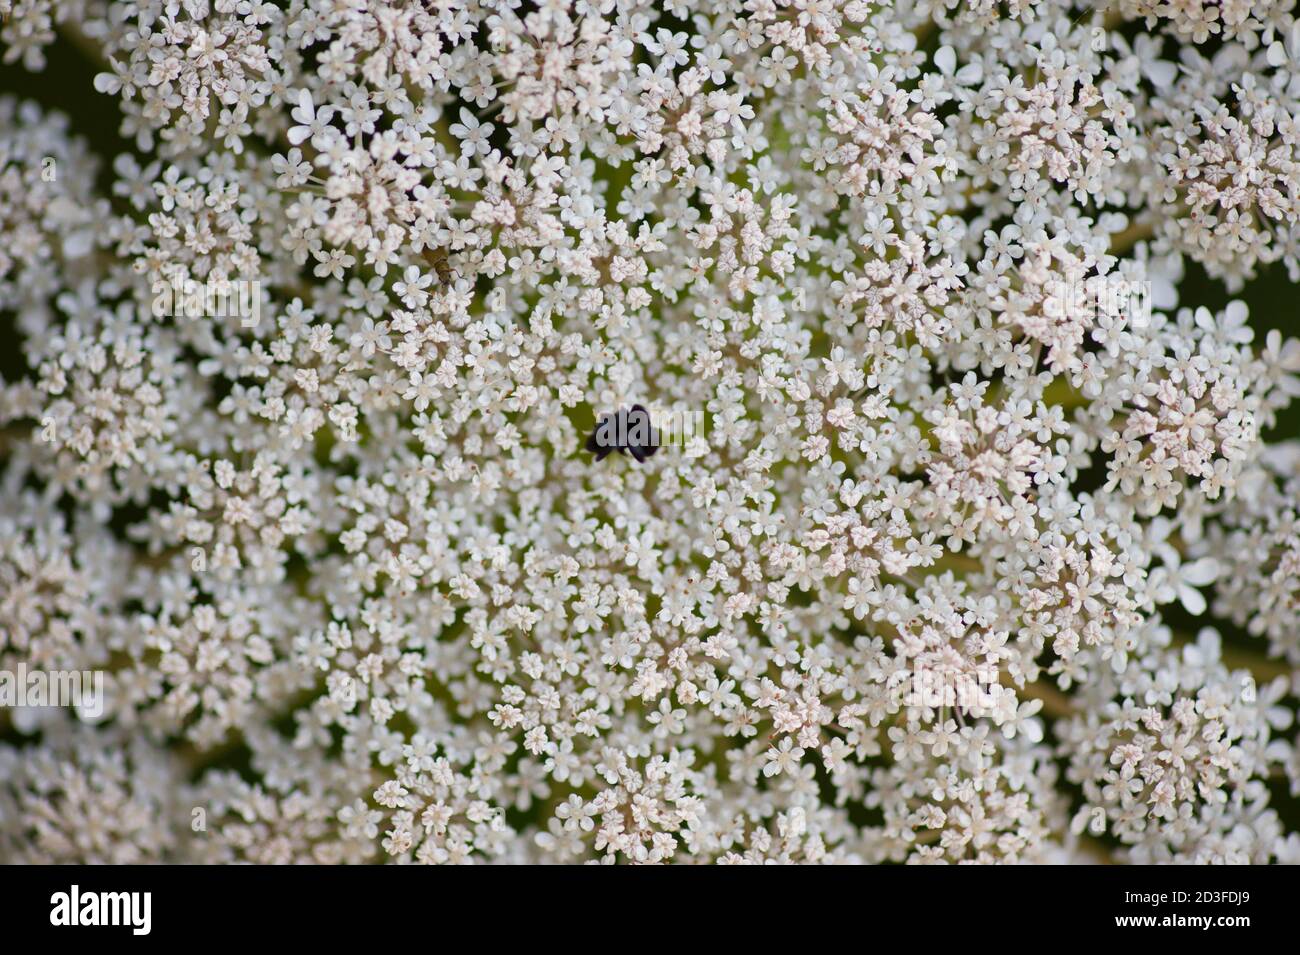 Wild carrot flower detail, Apiaceae, Umbelliferae, celery, parsley family, family of aromatic plants Stock Photo